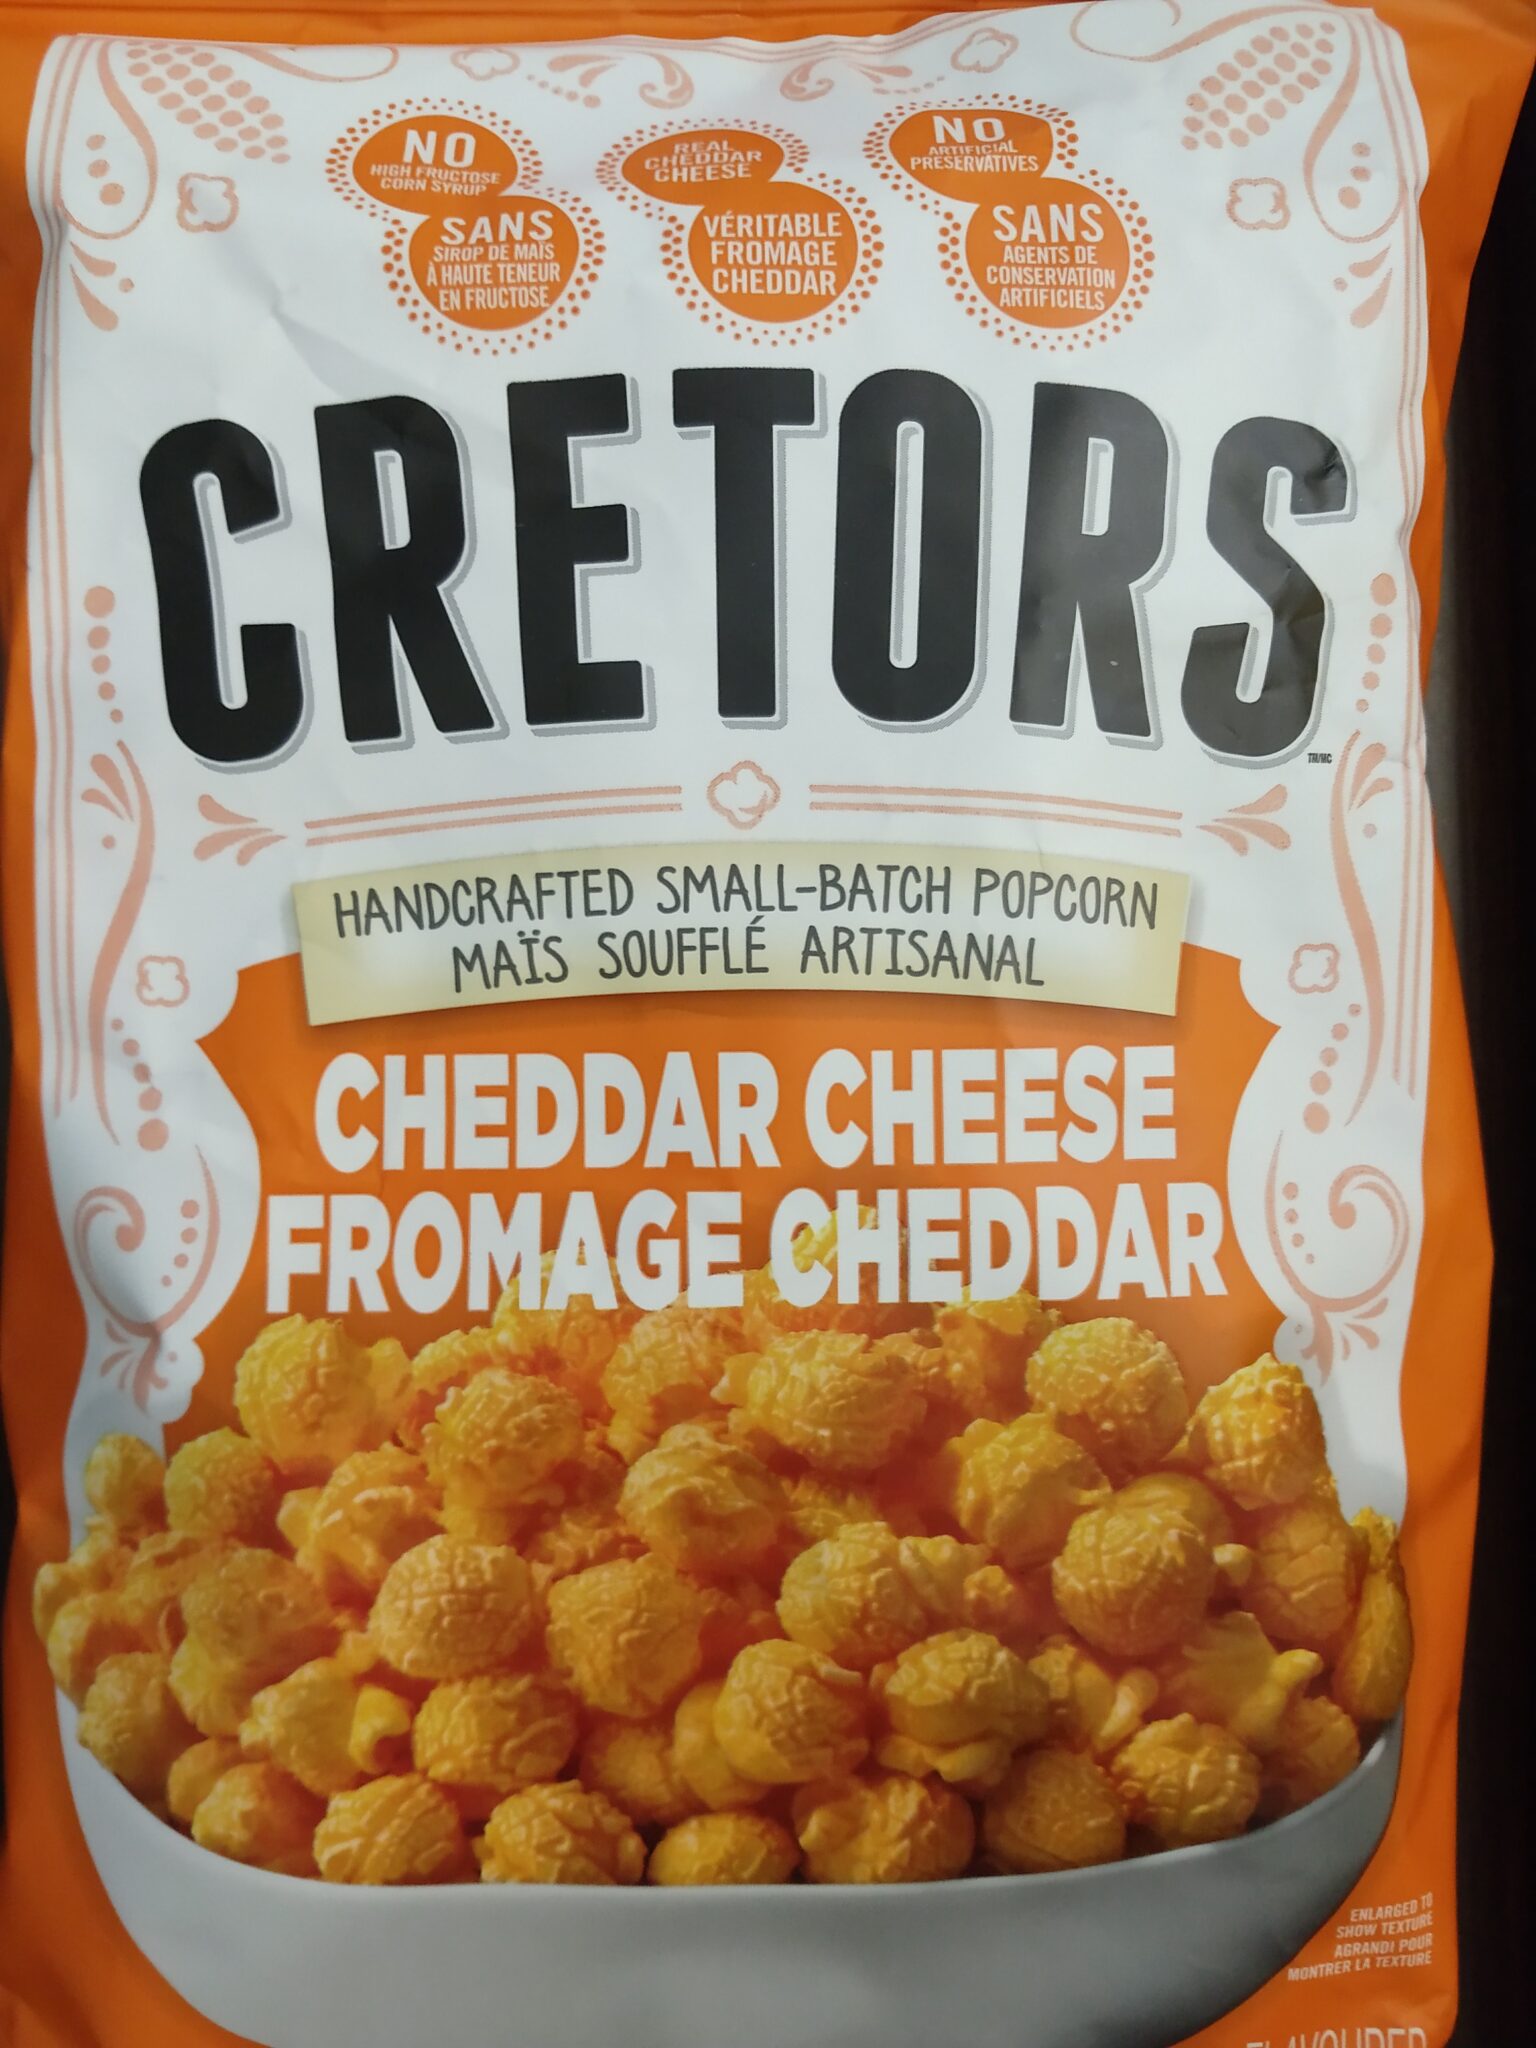 Cretors – Cheddar Cheese Popcorn